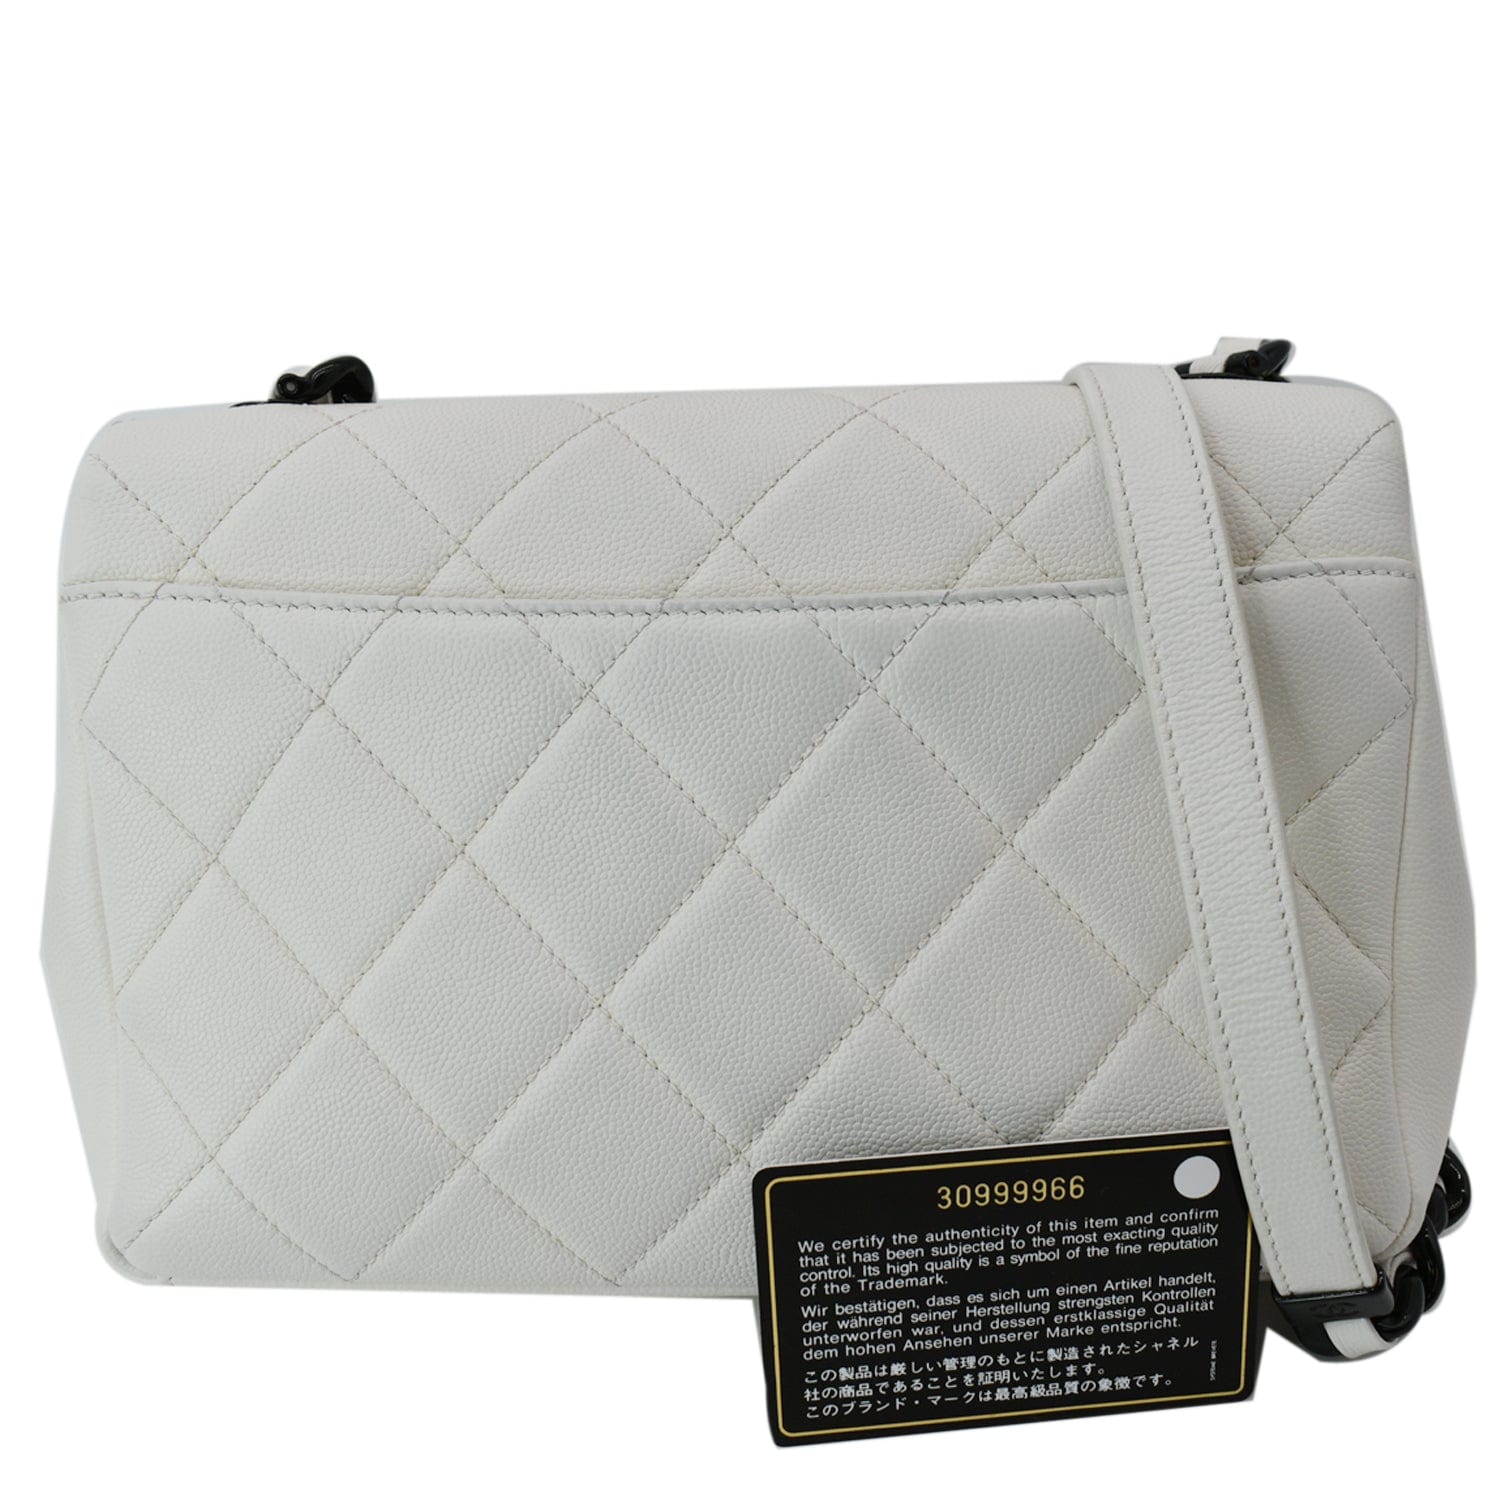 Handbag Crush: My Classic Chanel Flap - Oh La Latkes